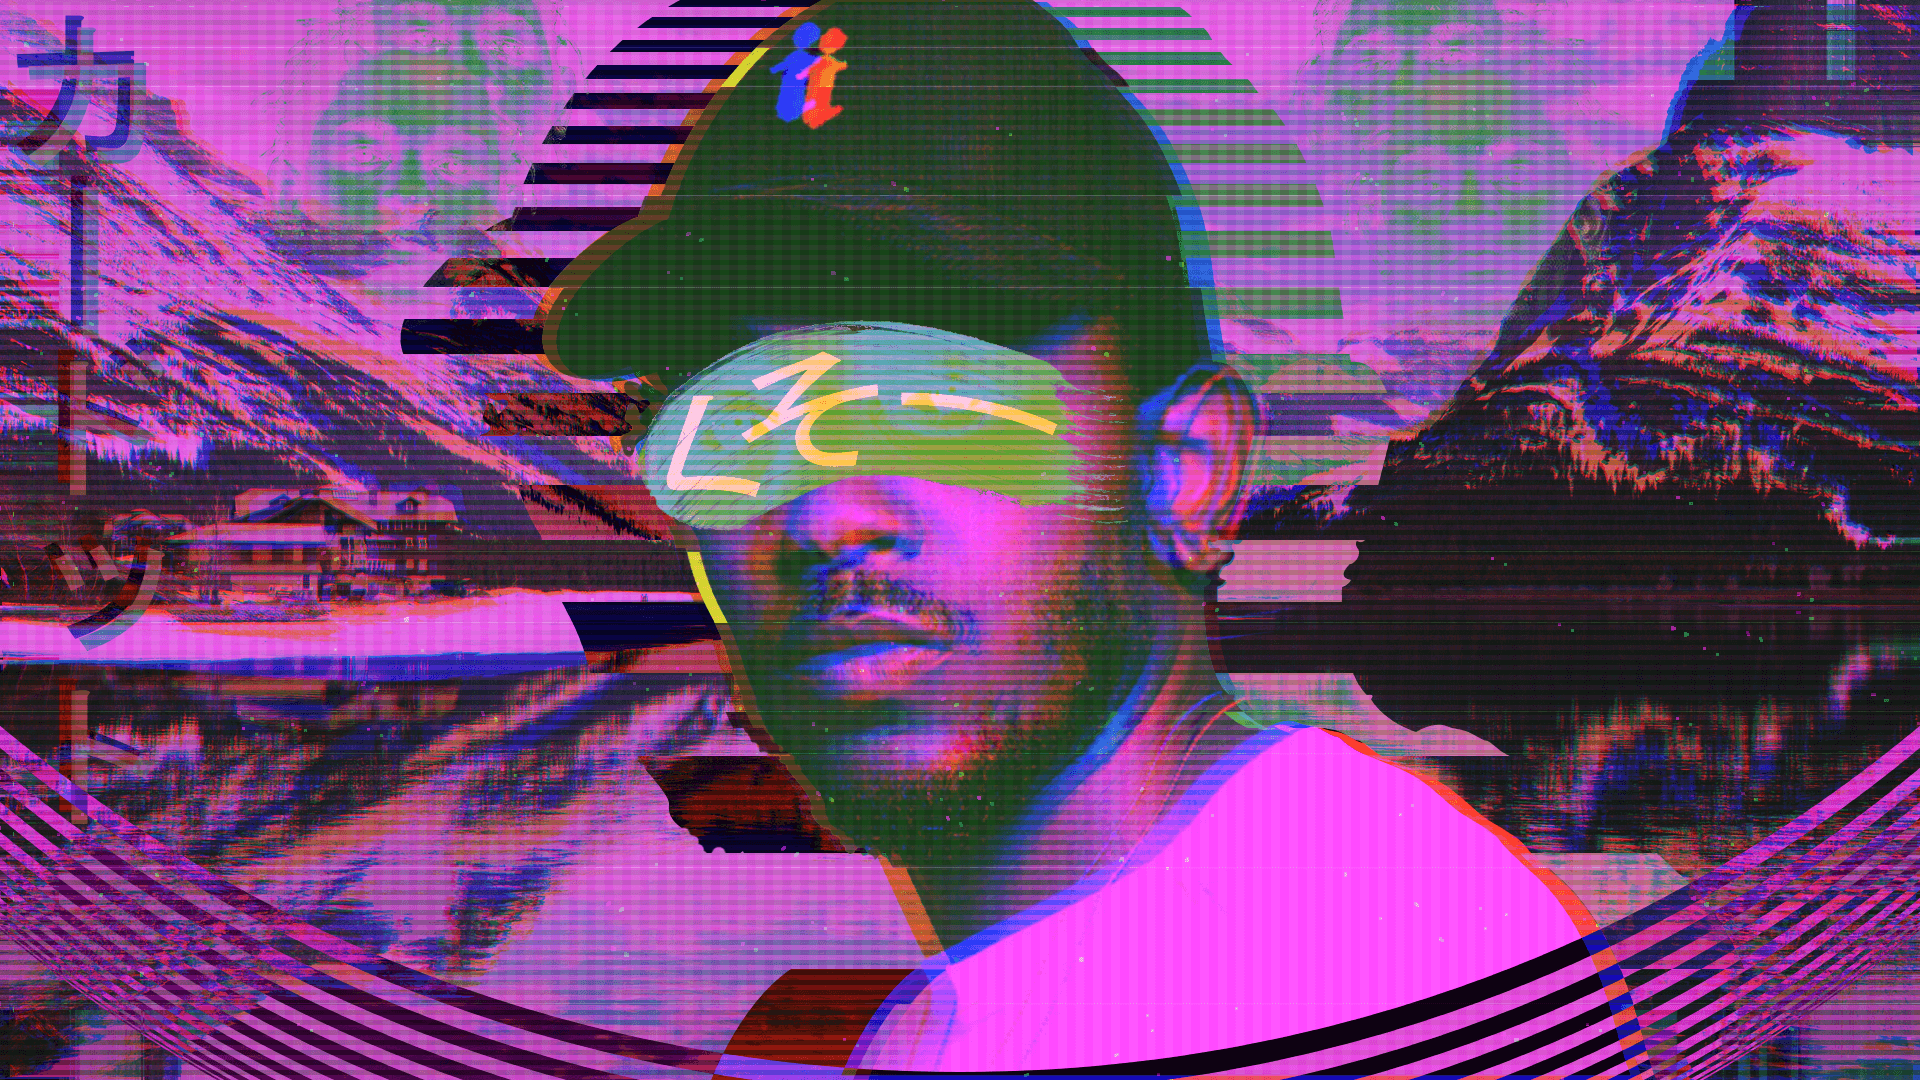 Kendrick Lamar Vaporwave Ish Wallpaper [1980x1080] [OC